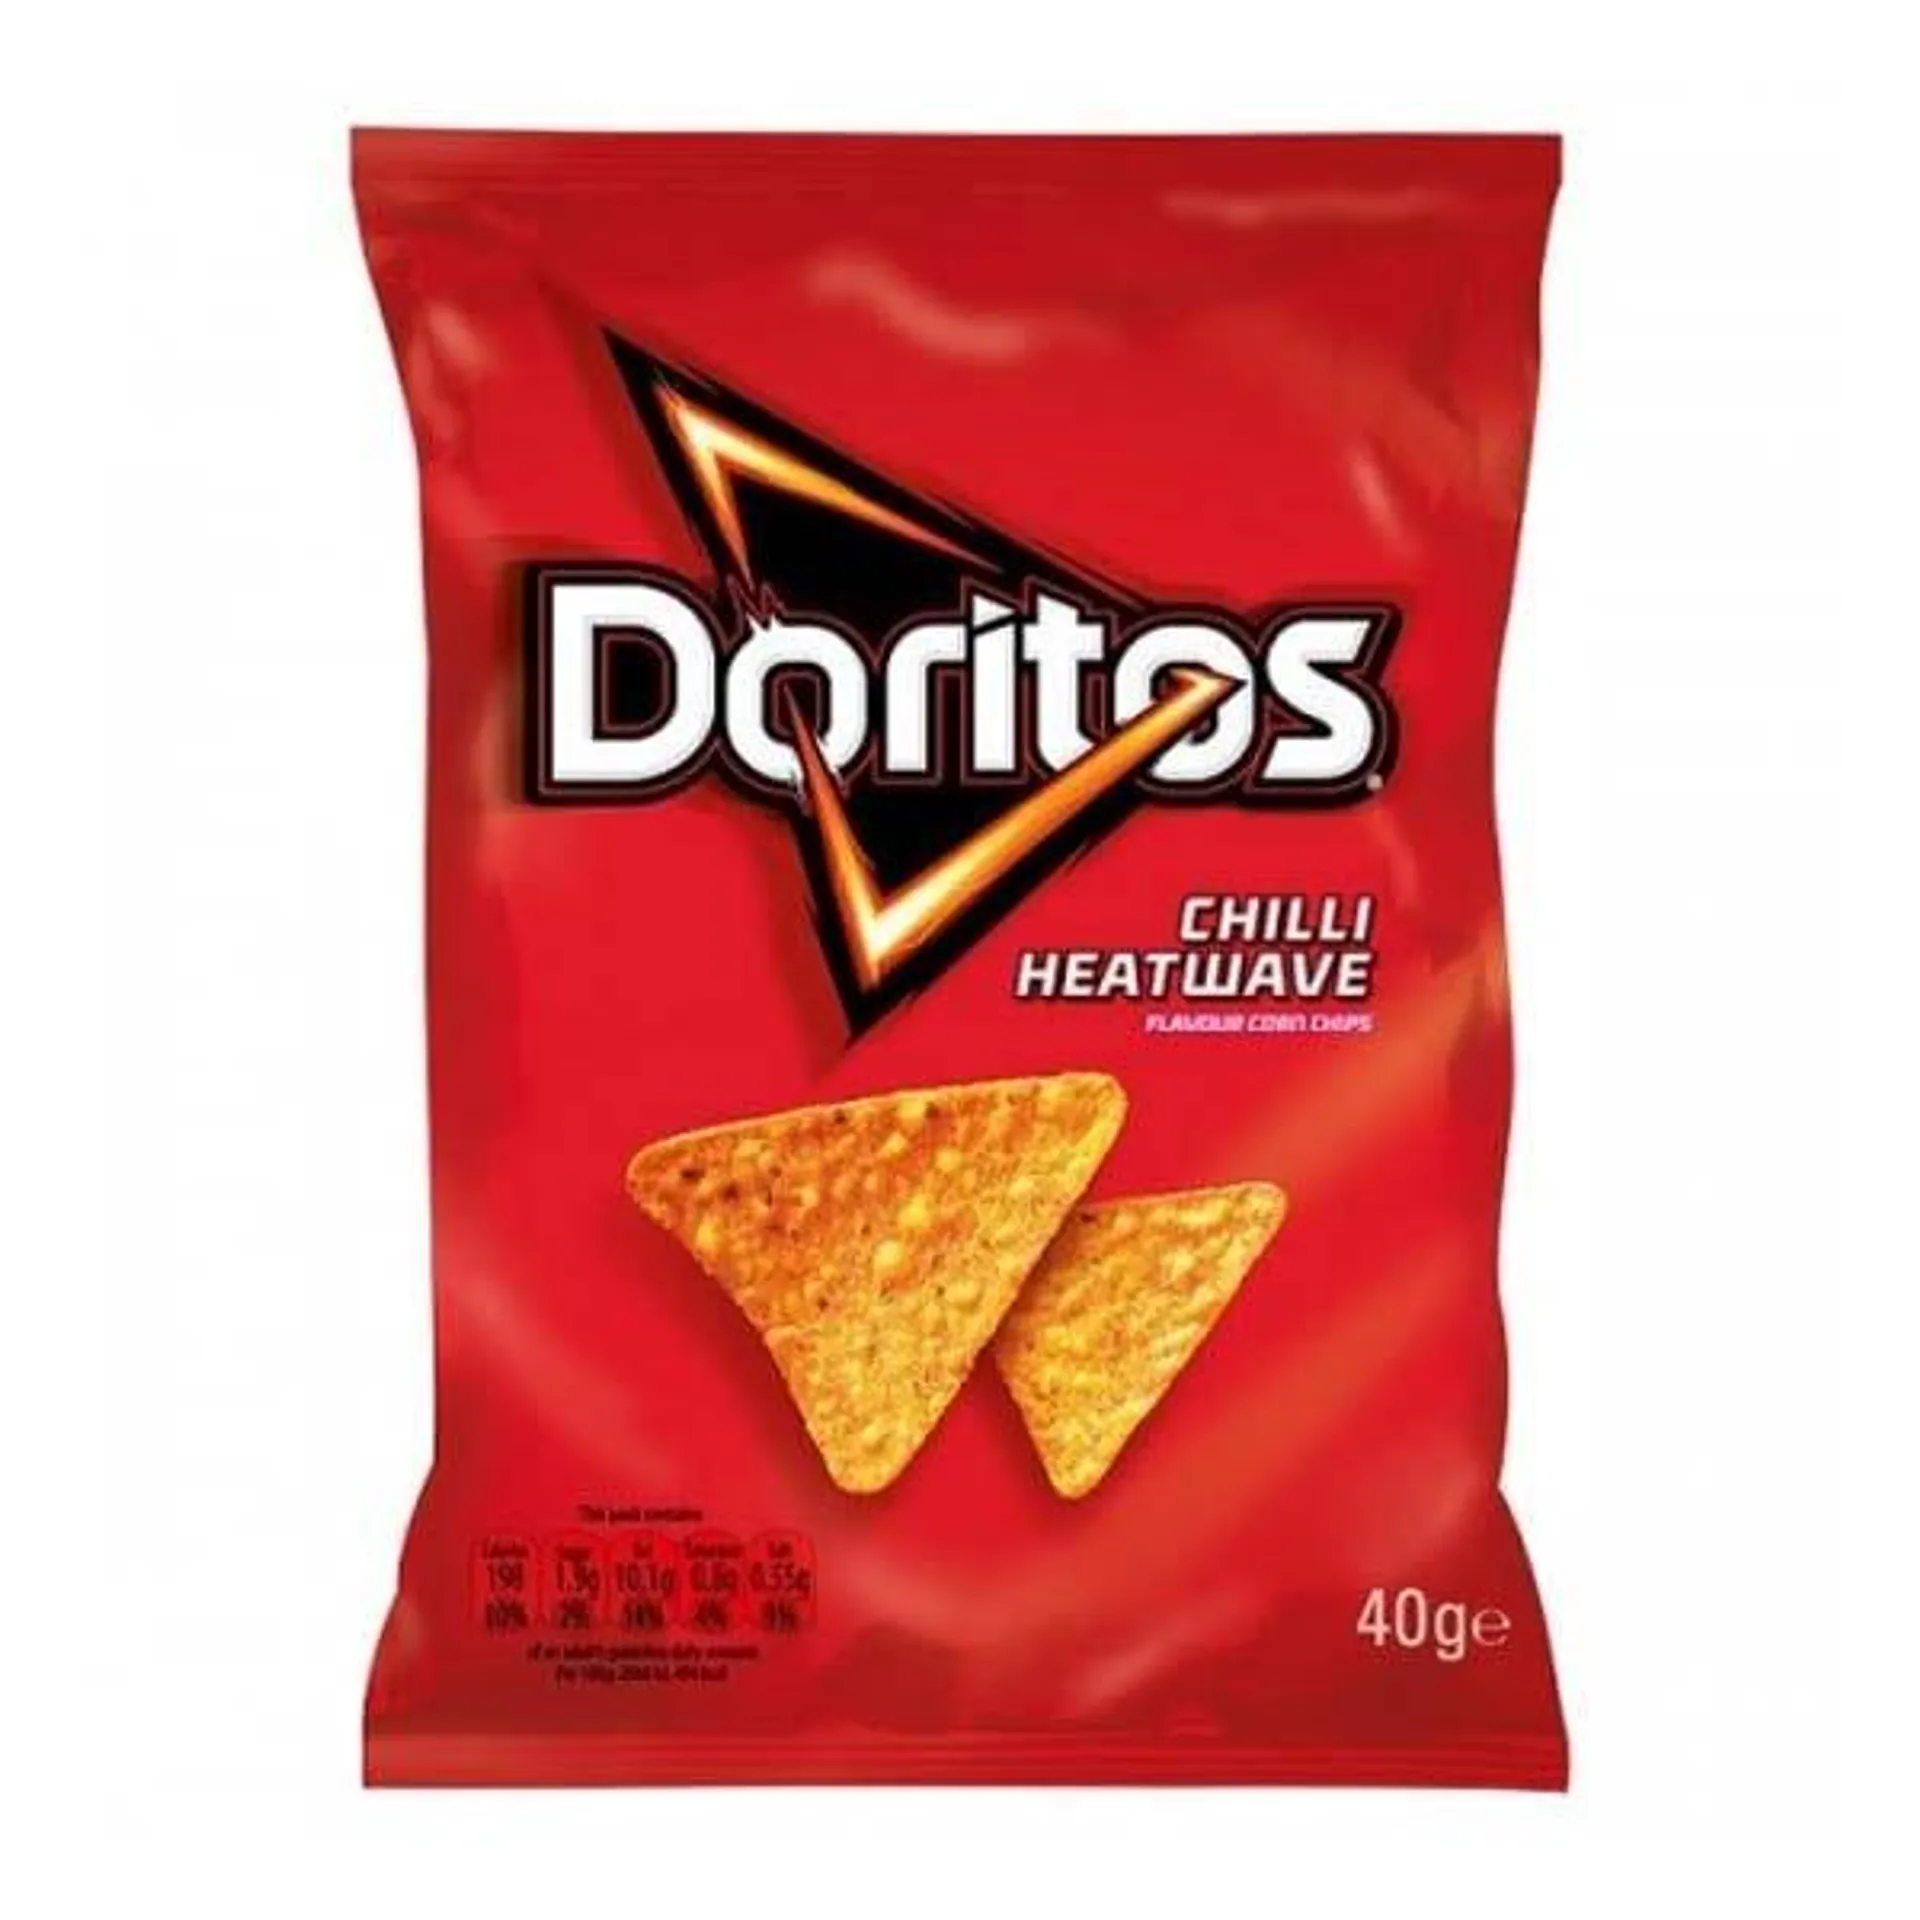 Doritos Chilli Heatwave Multipack Tortilla Chips Crisps 5 x 30g